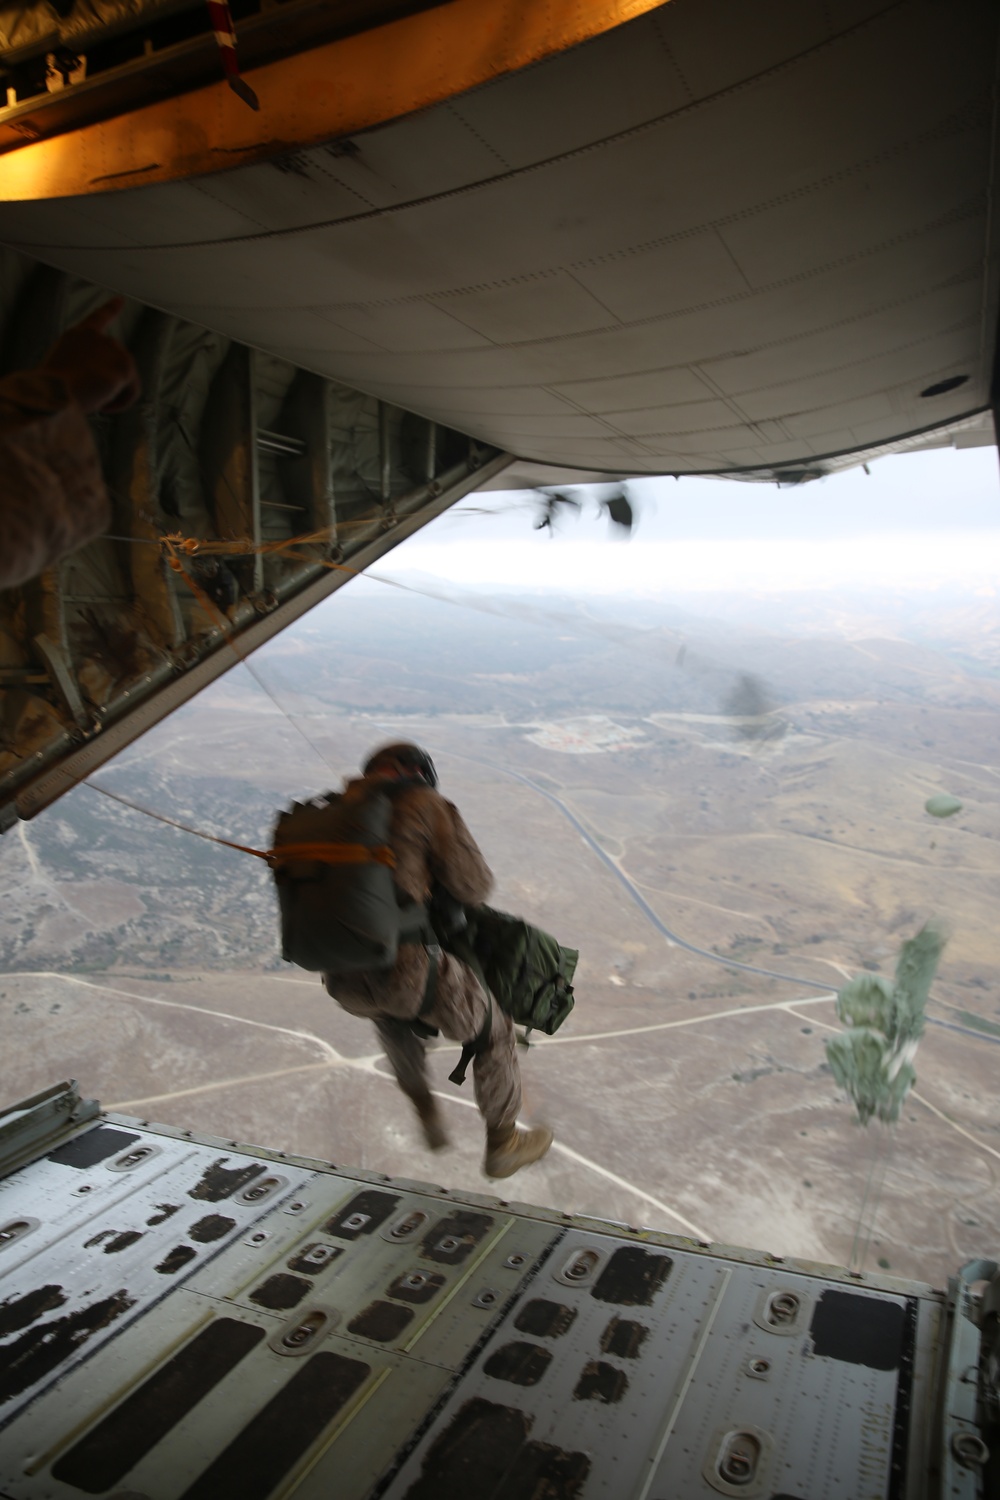 VMGR-352, 1st Radio Battalion conduct parachute drop